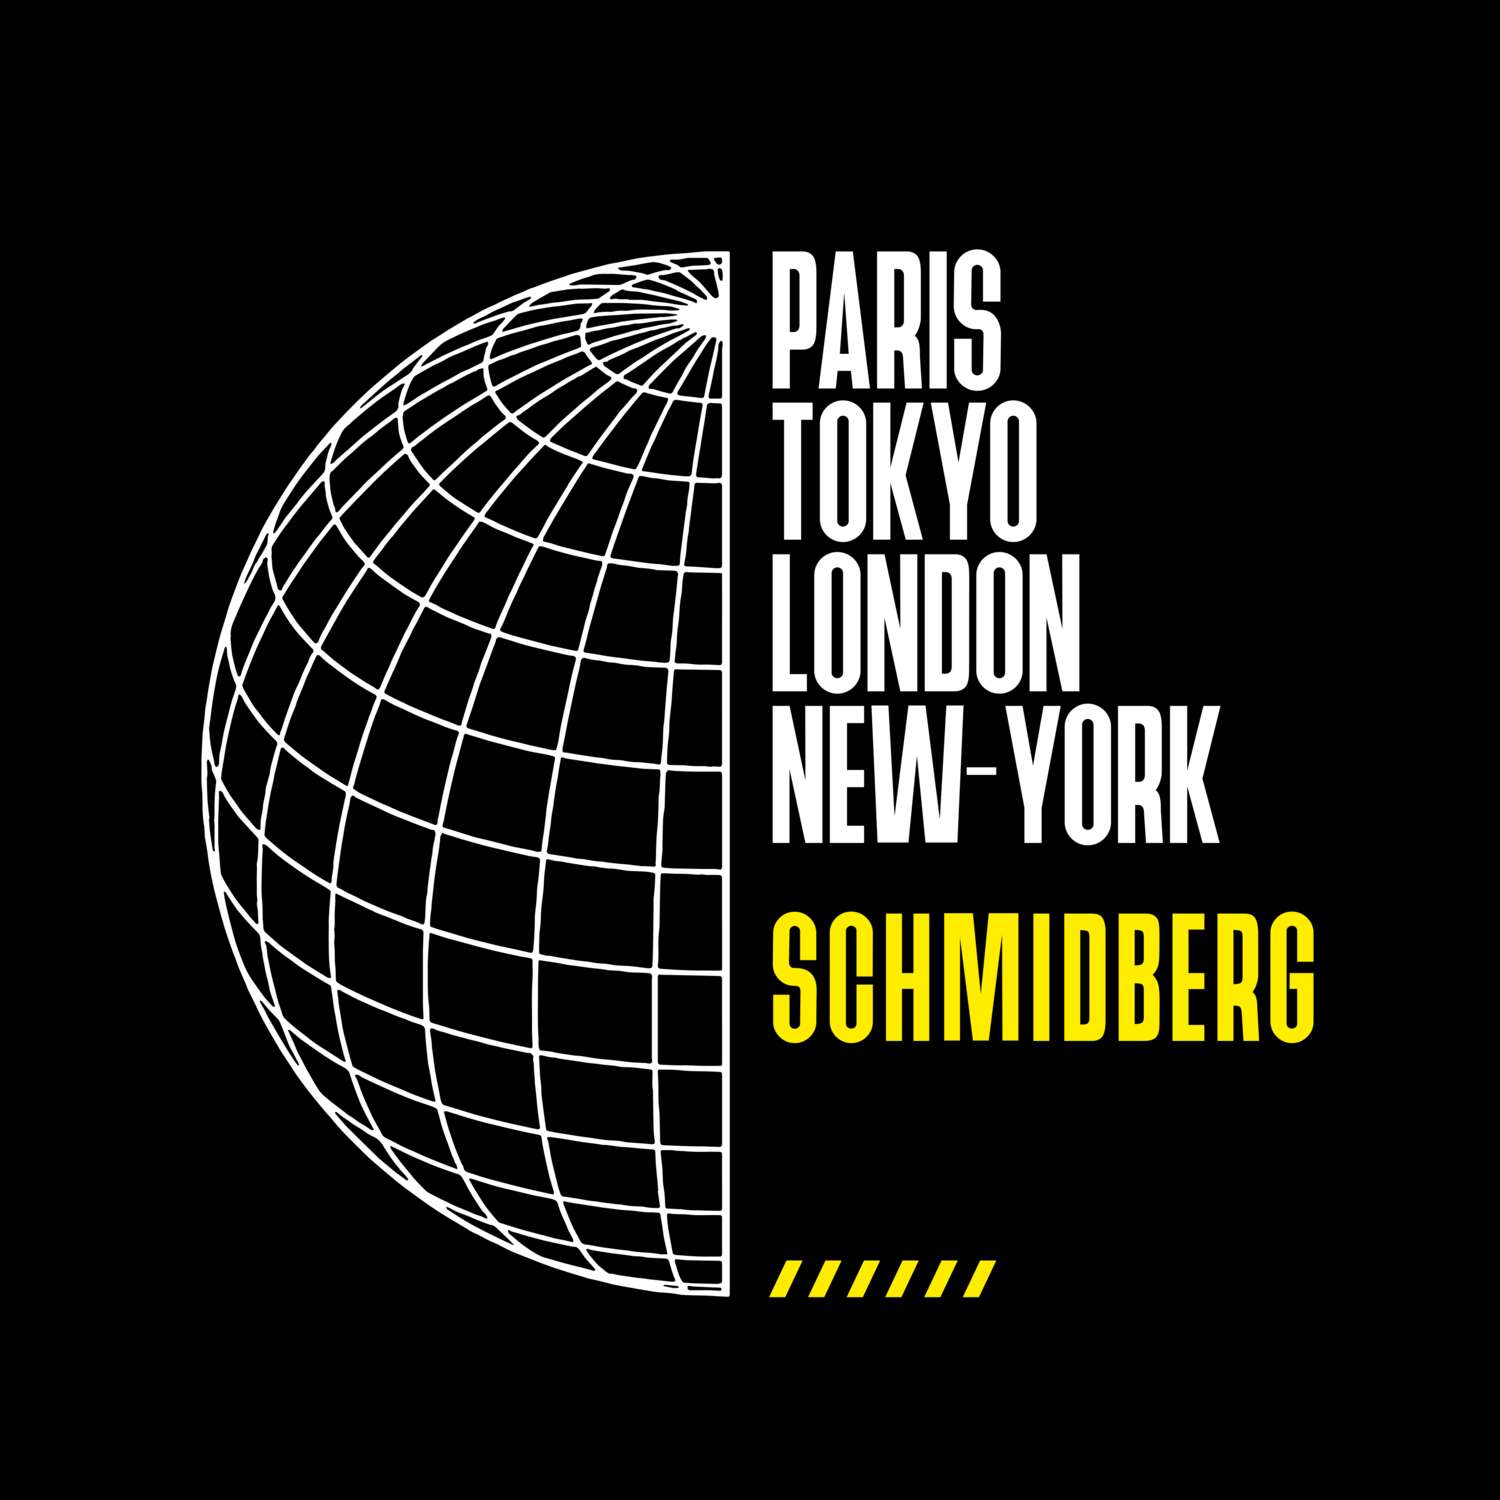 Schmidberg T-Shirt »Paris Tokyo London«